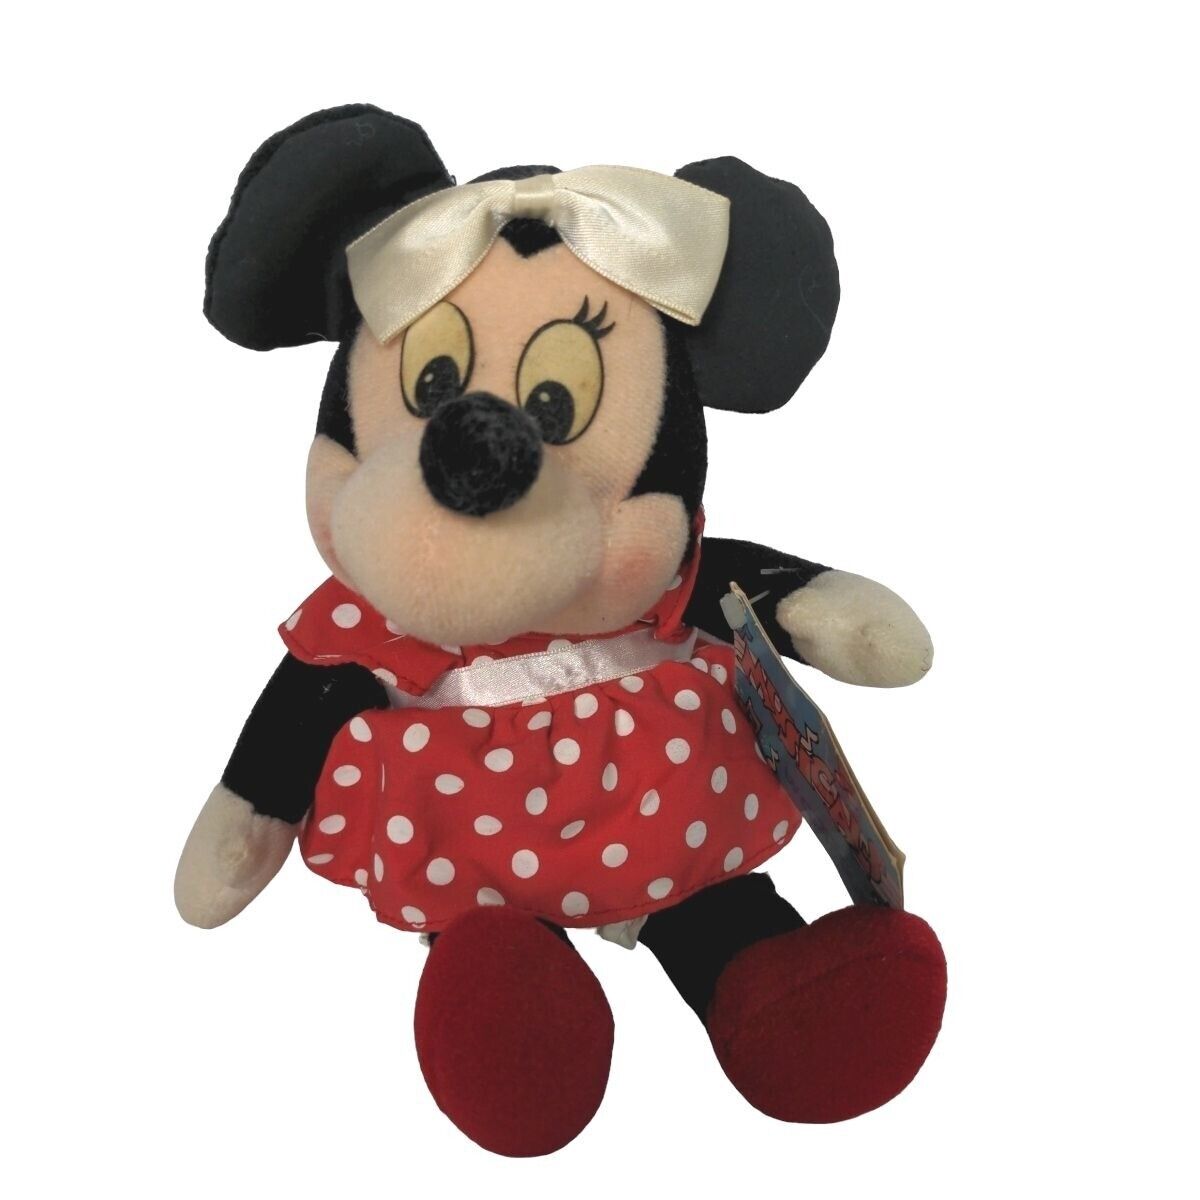 Vintage 1985 Disney Applause Minnie Mouse Music Box Plush Stuffed Animal 9.5\